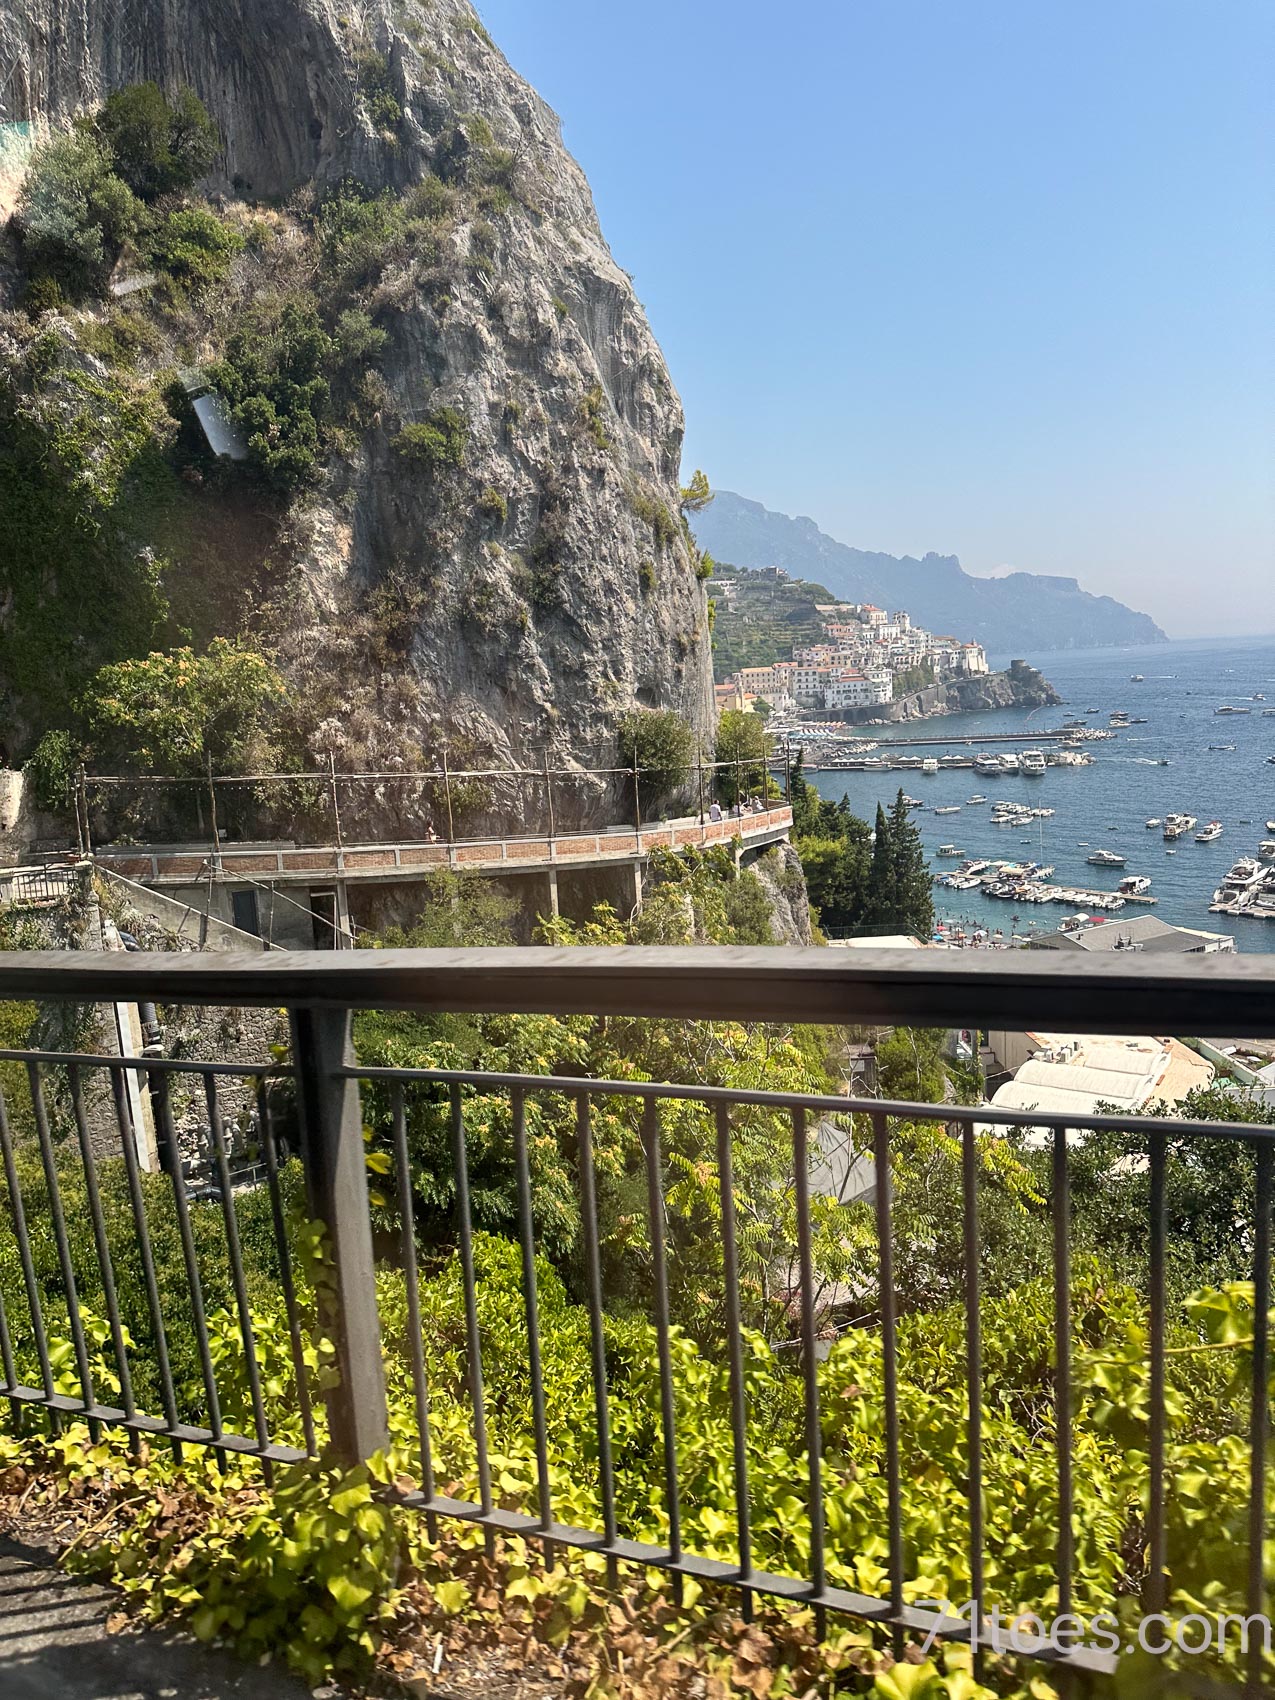 Tiny roads clinging to cliffs on the Amalfi Coast